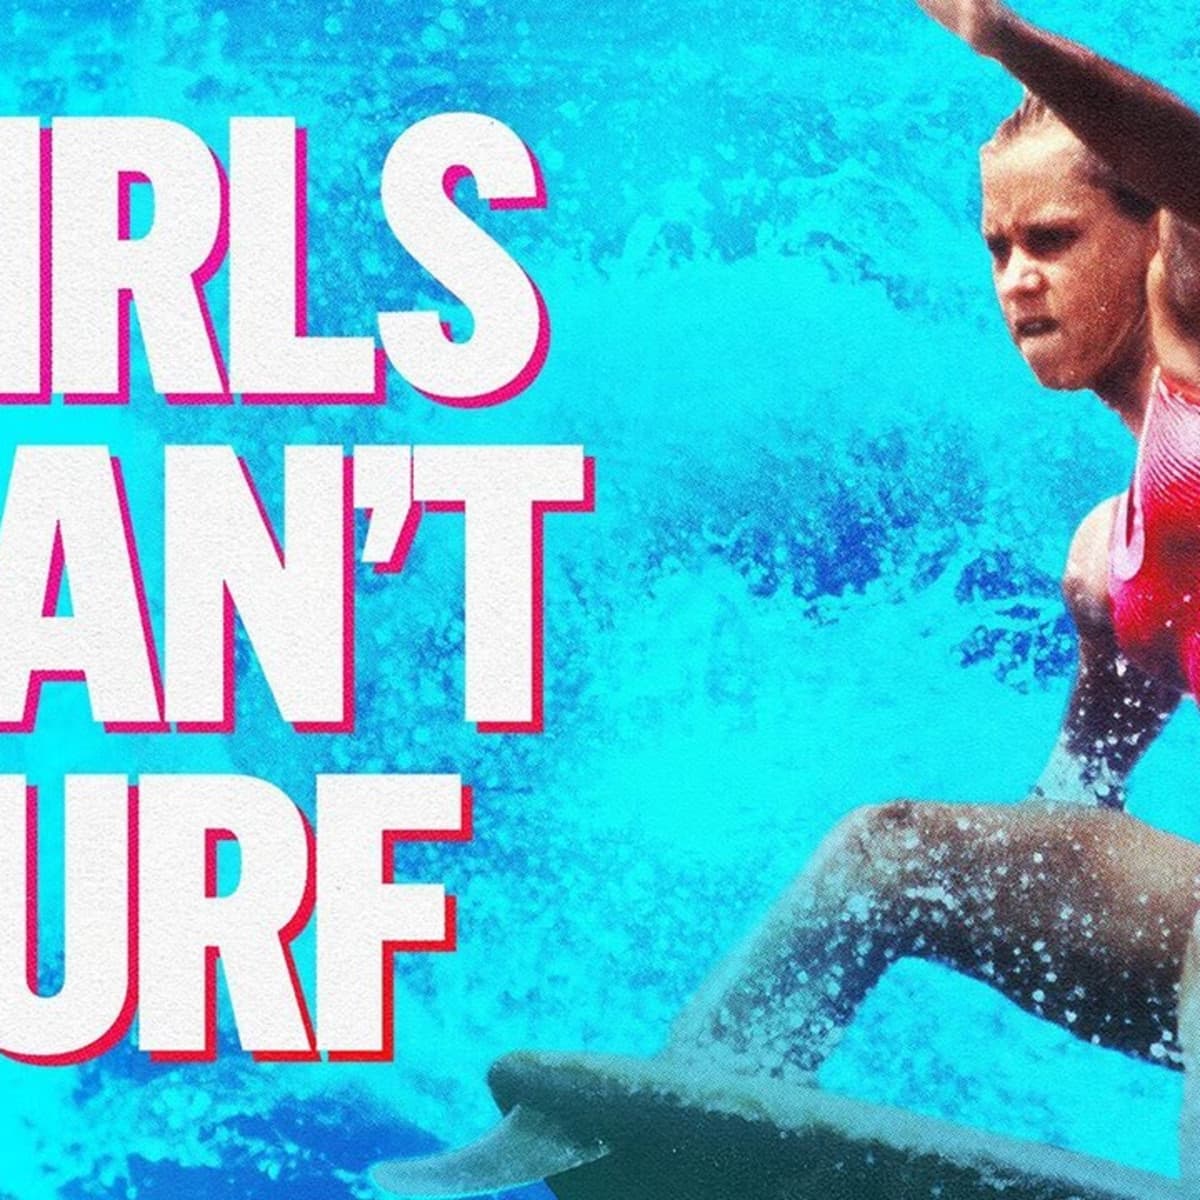 TRW Surf Girl 2 (Vol 1) - Download